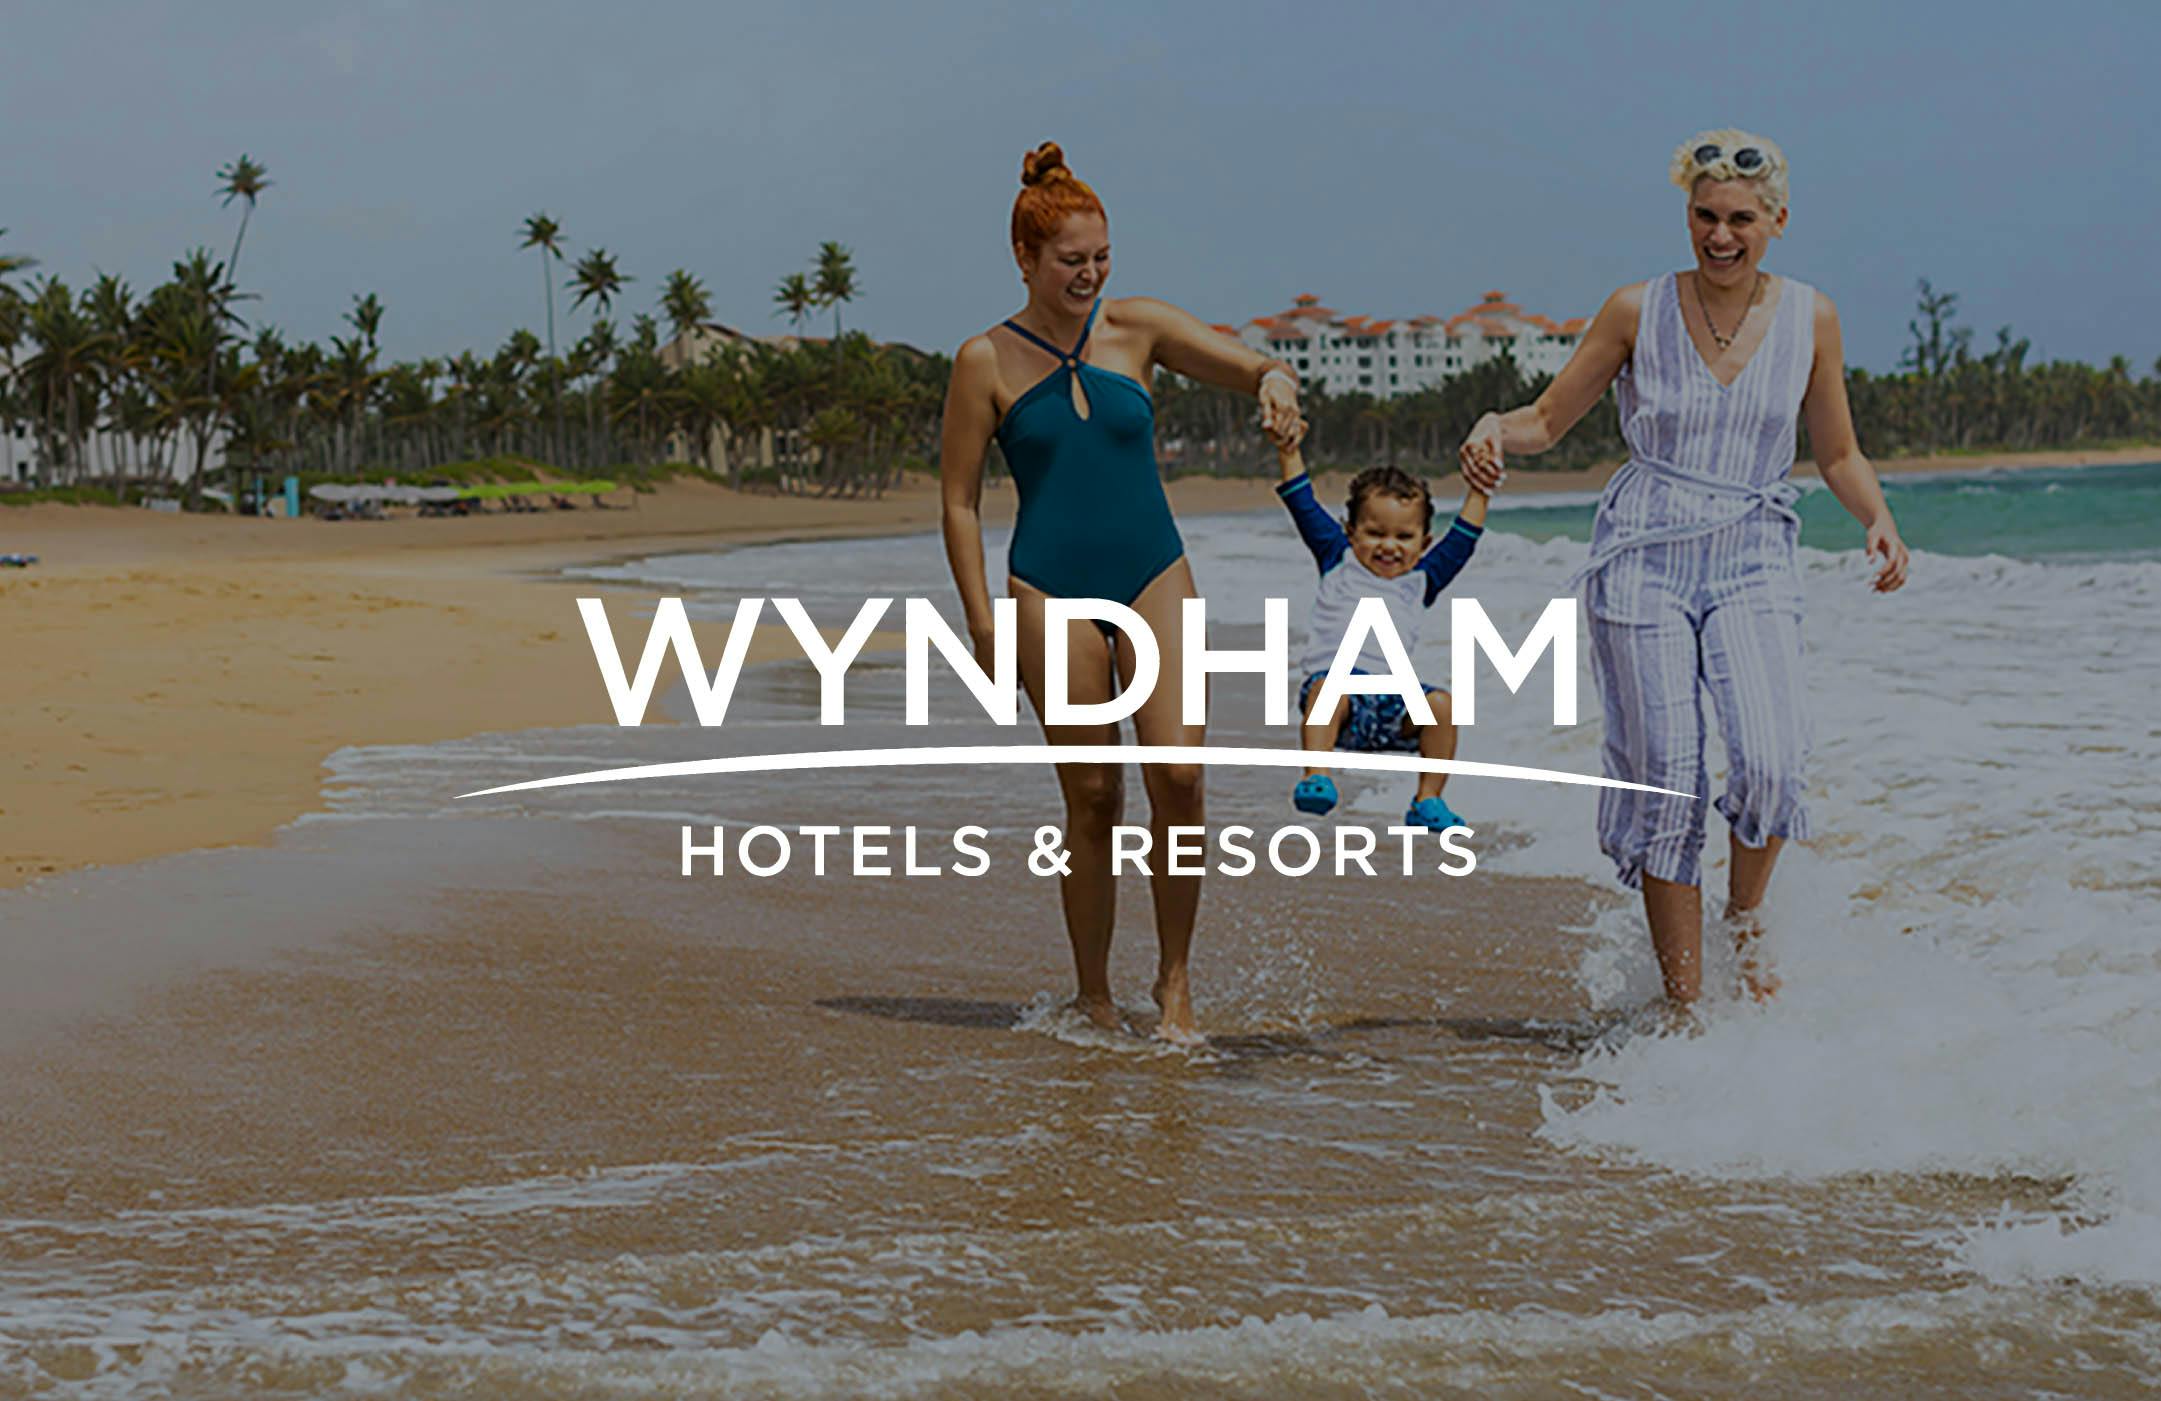 Wyndham Hotels & Resorts logo against image of resort